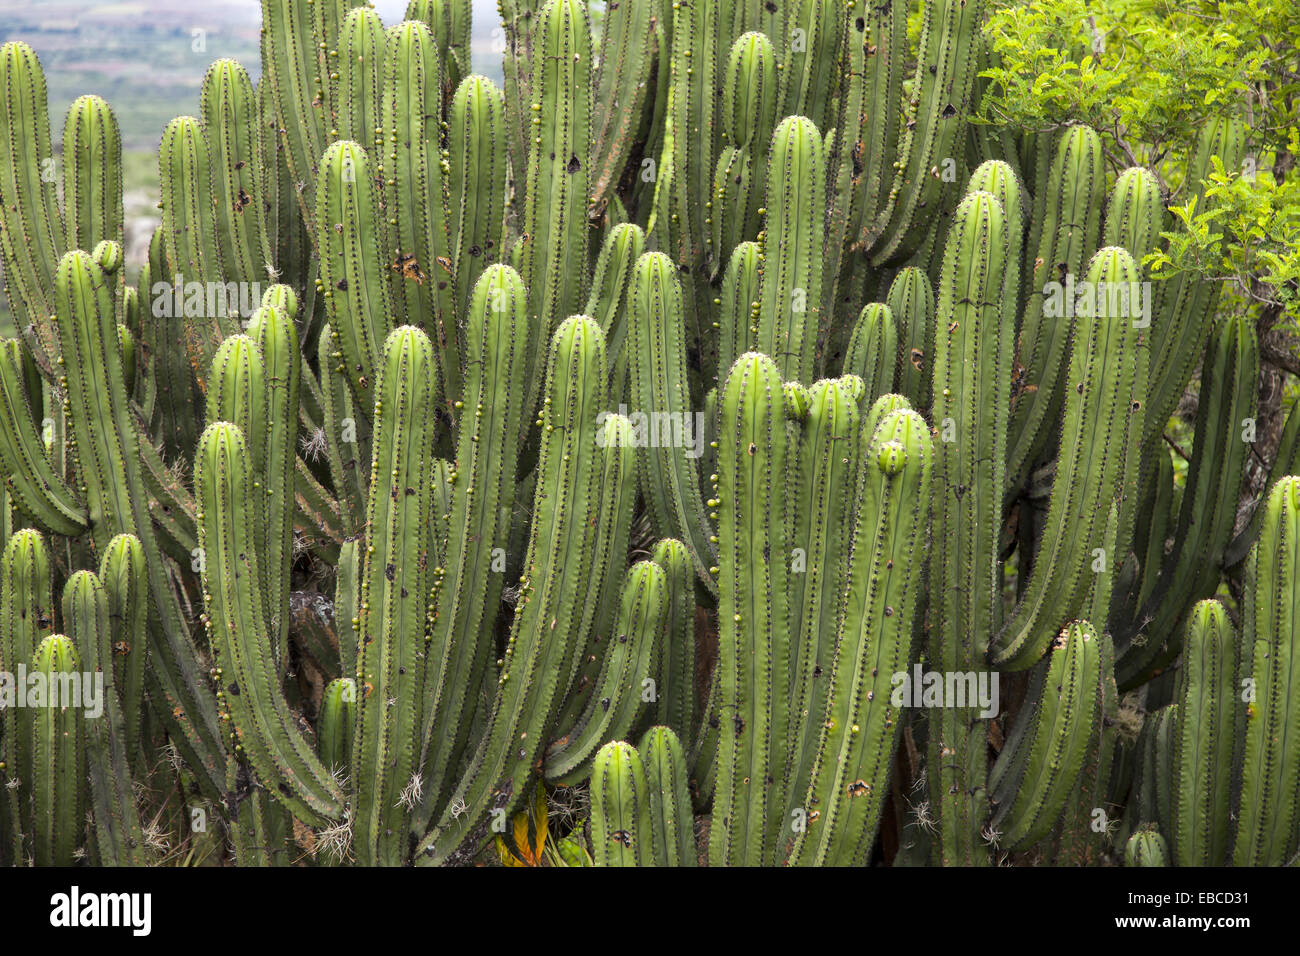 Cactus details: Yagul Archaeoligical Site at Oaxaca Mexico Stock Photo -  Alamy